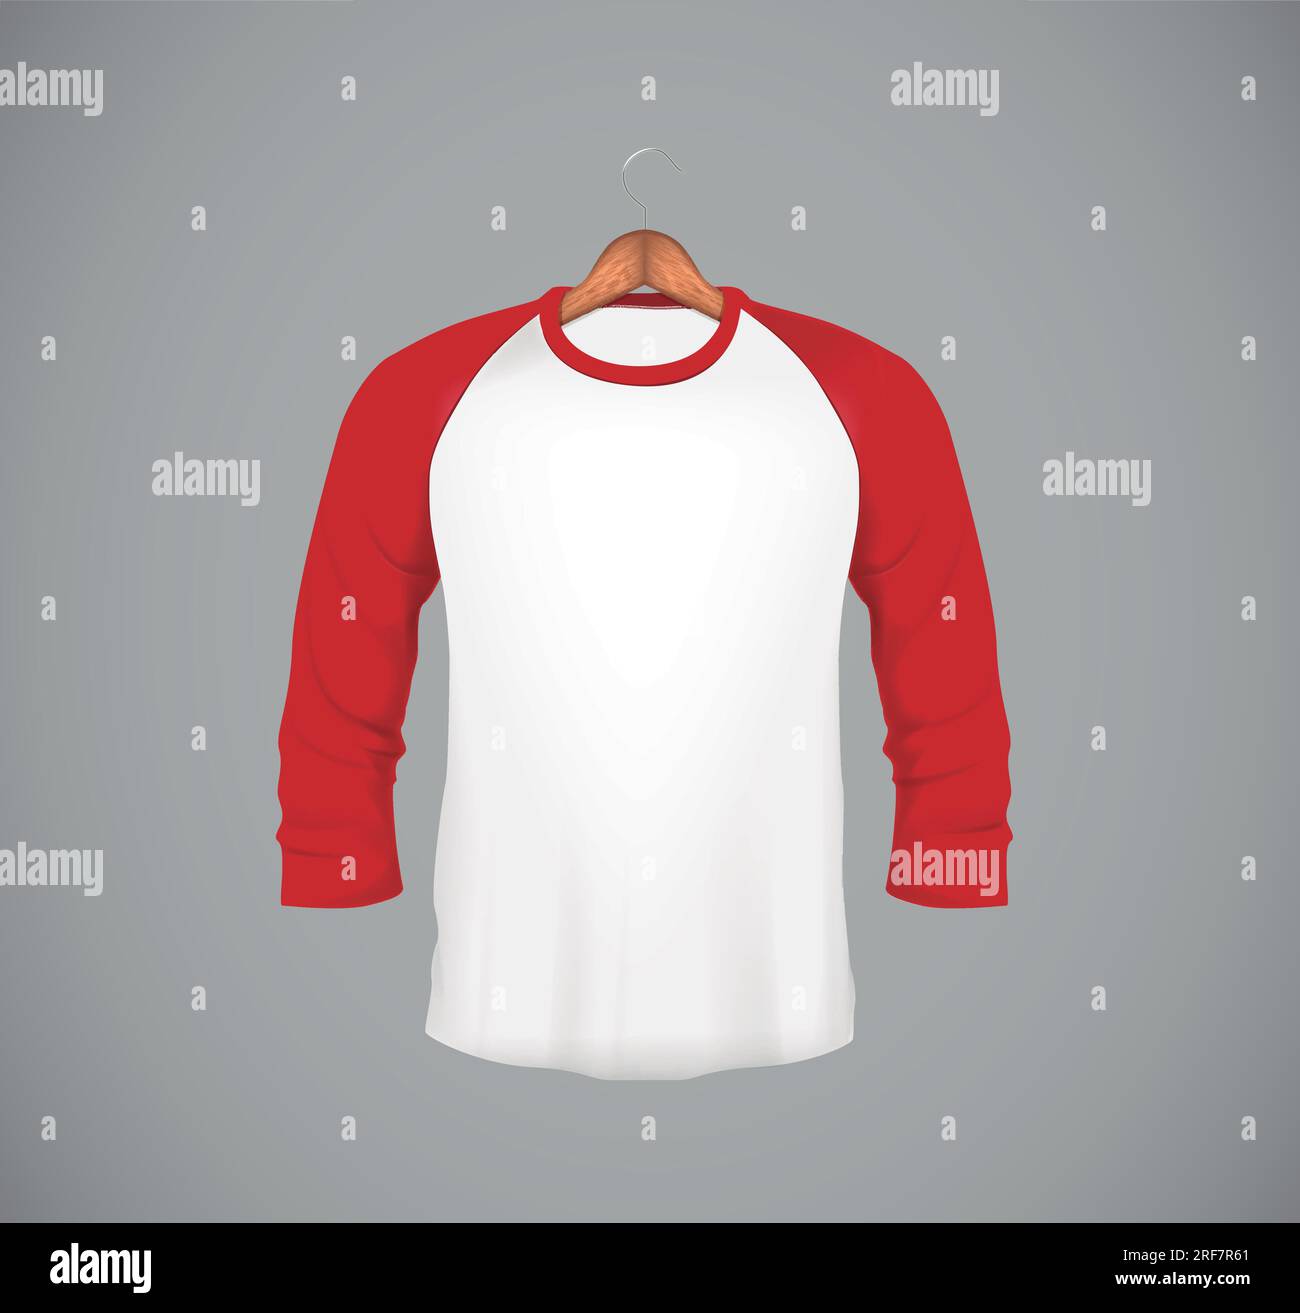 Plantilla de diseño de camisa de manga larga roja: fotografía de